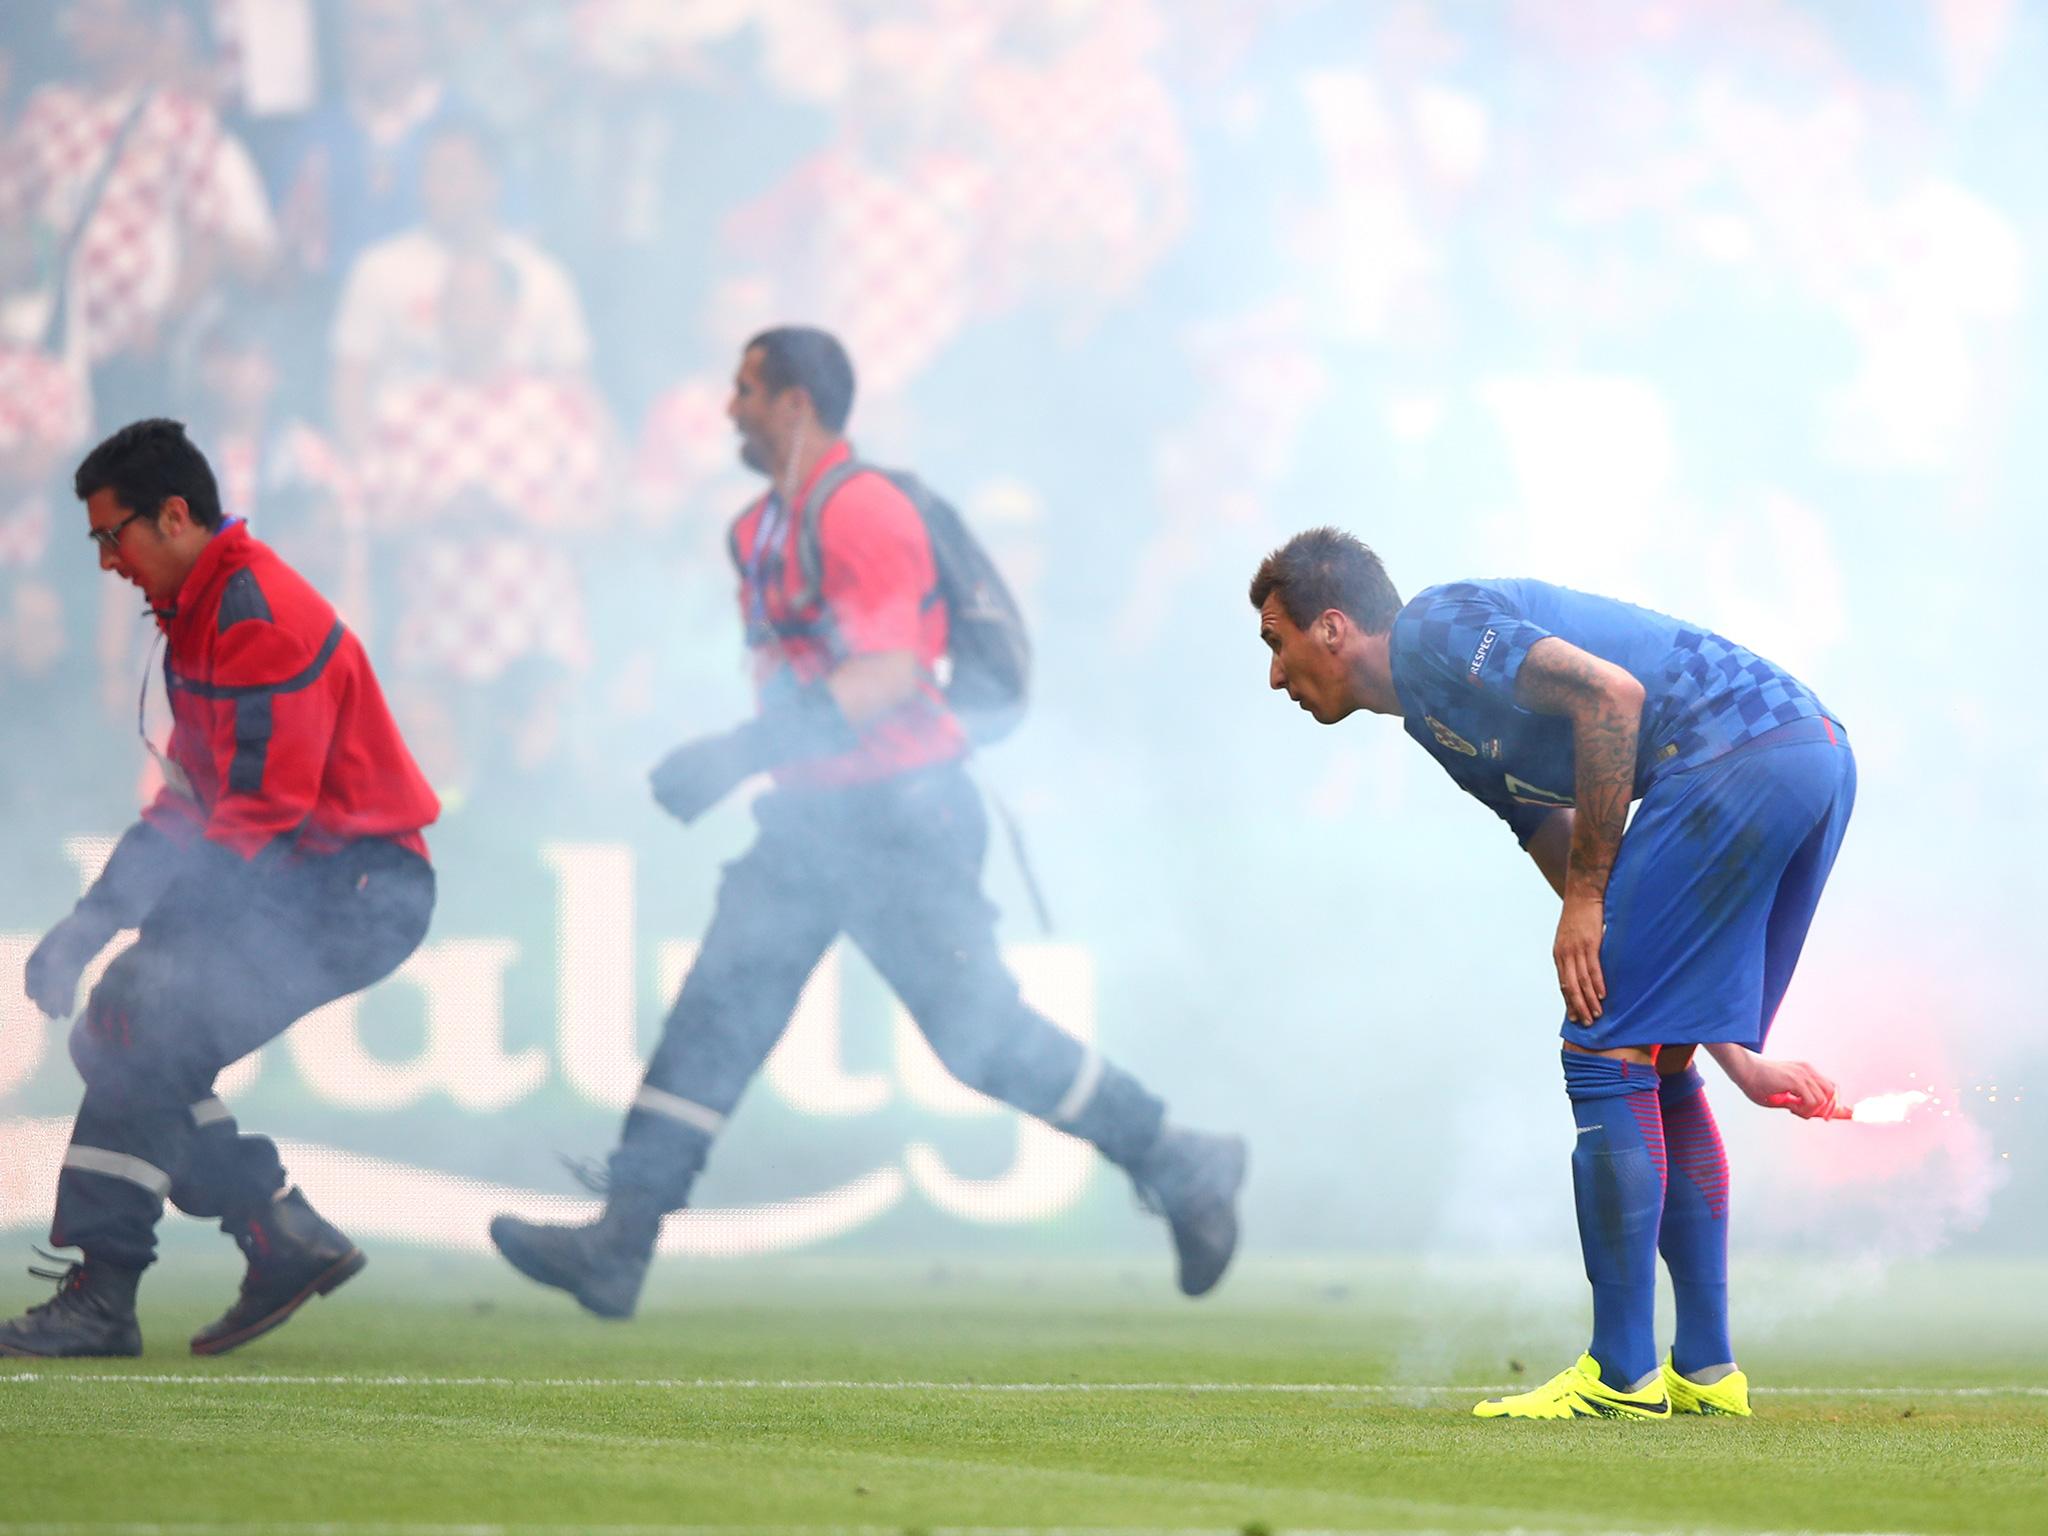 Mario Mandzukic, the Croatia striker, removing a flare from the field